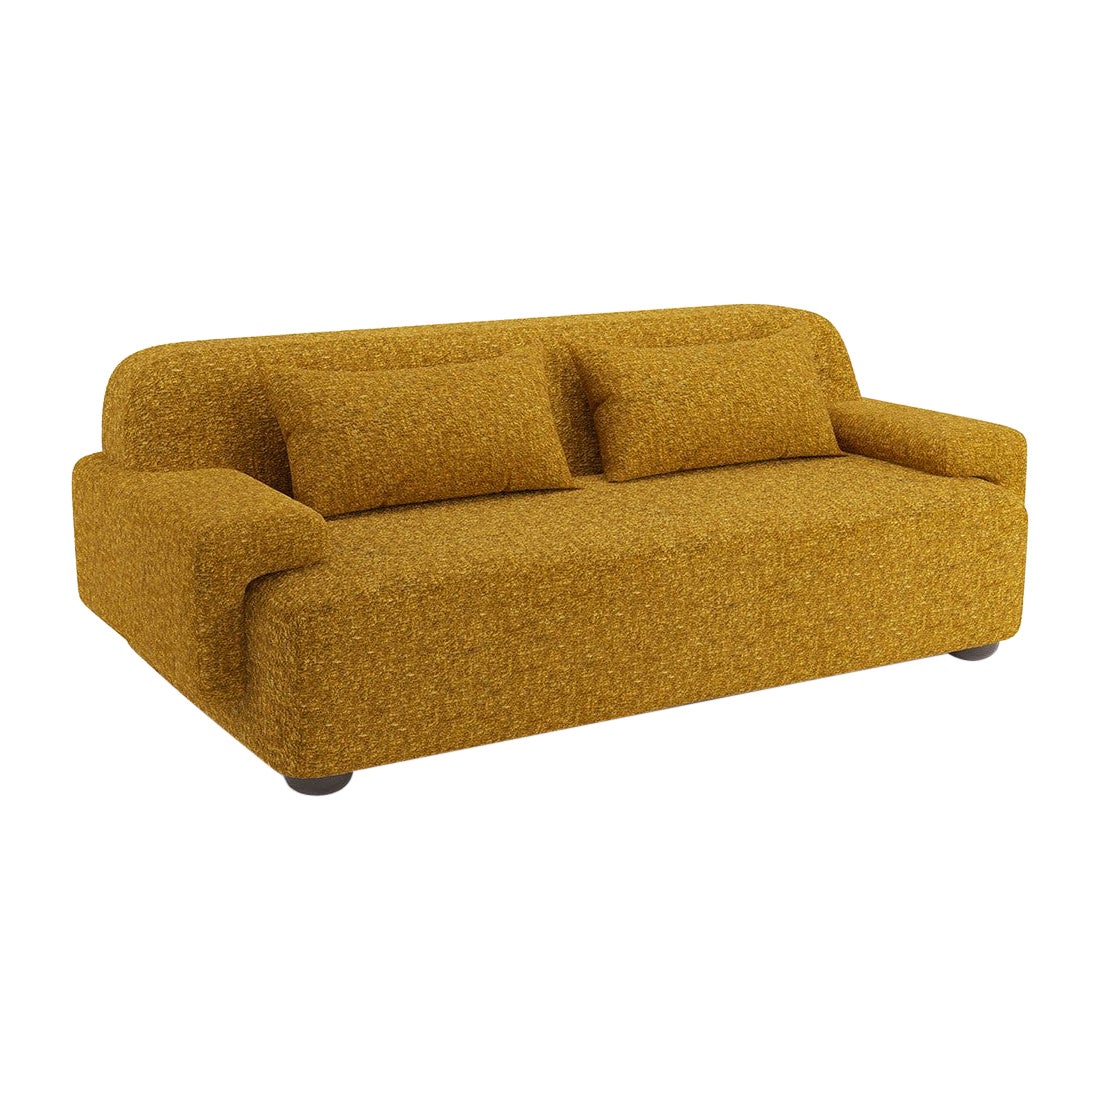 Popus Editions Lena 2.5 Seater Sofa in Amber Venice Chenille Velvet Upholstery For Sale